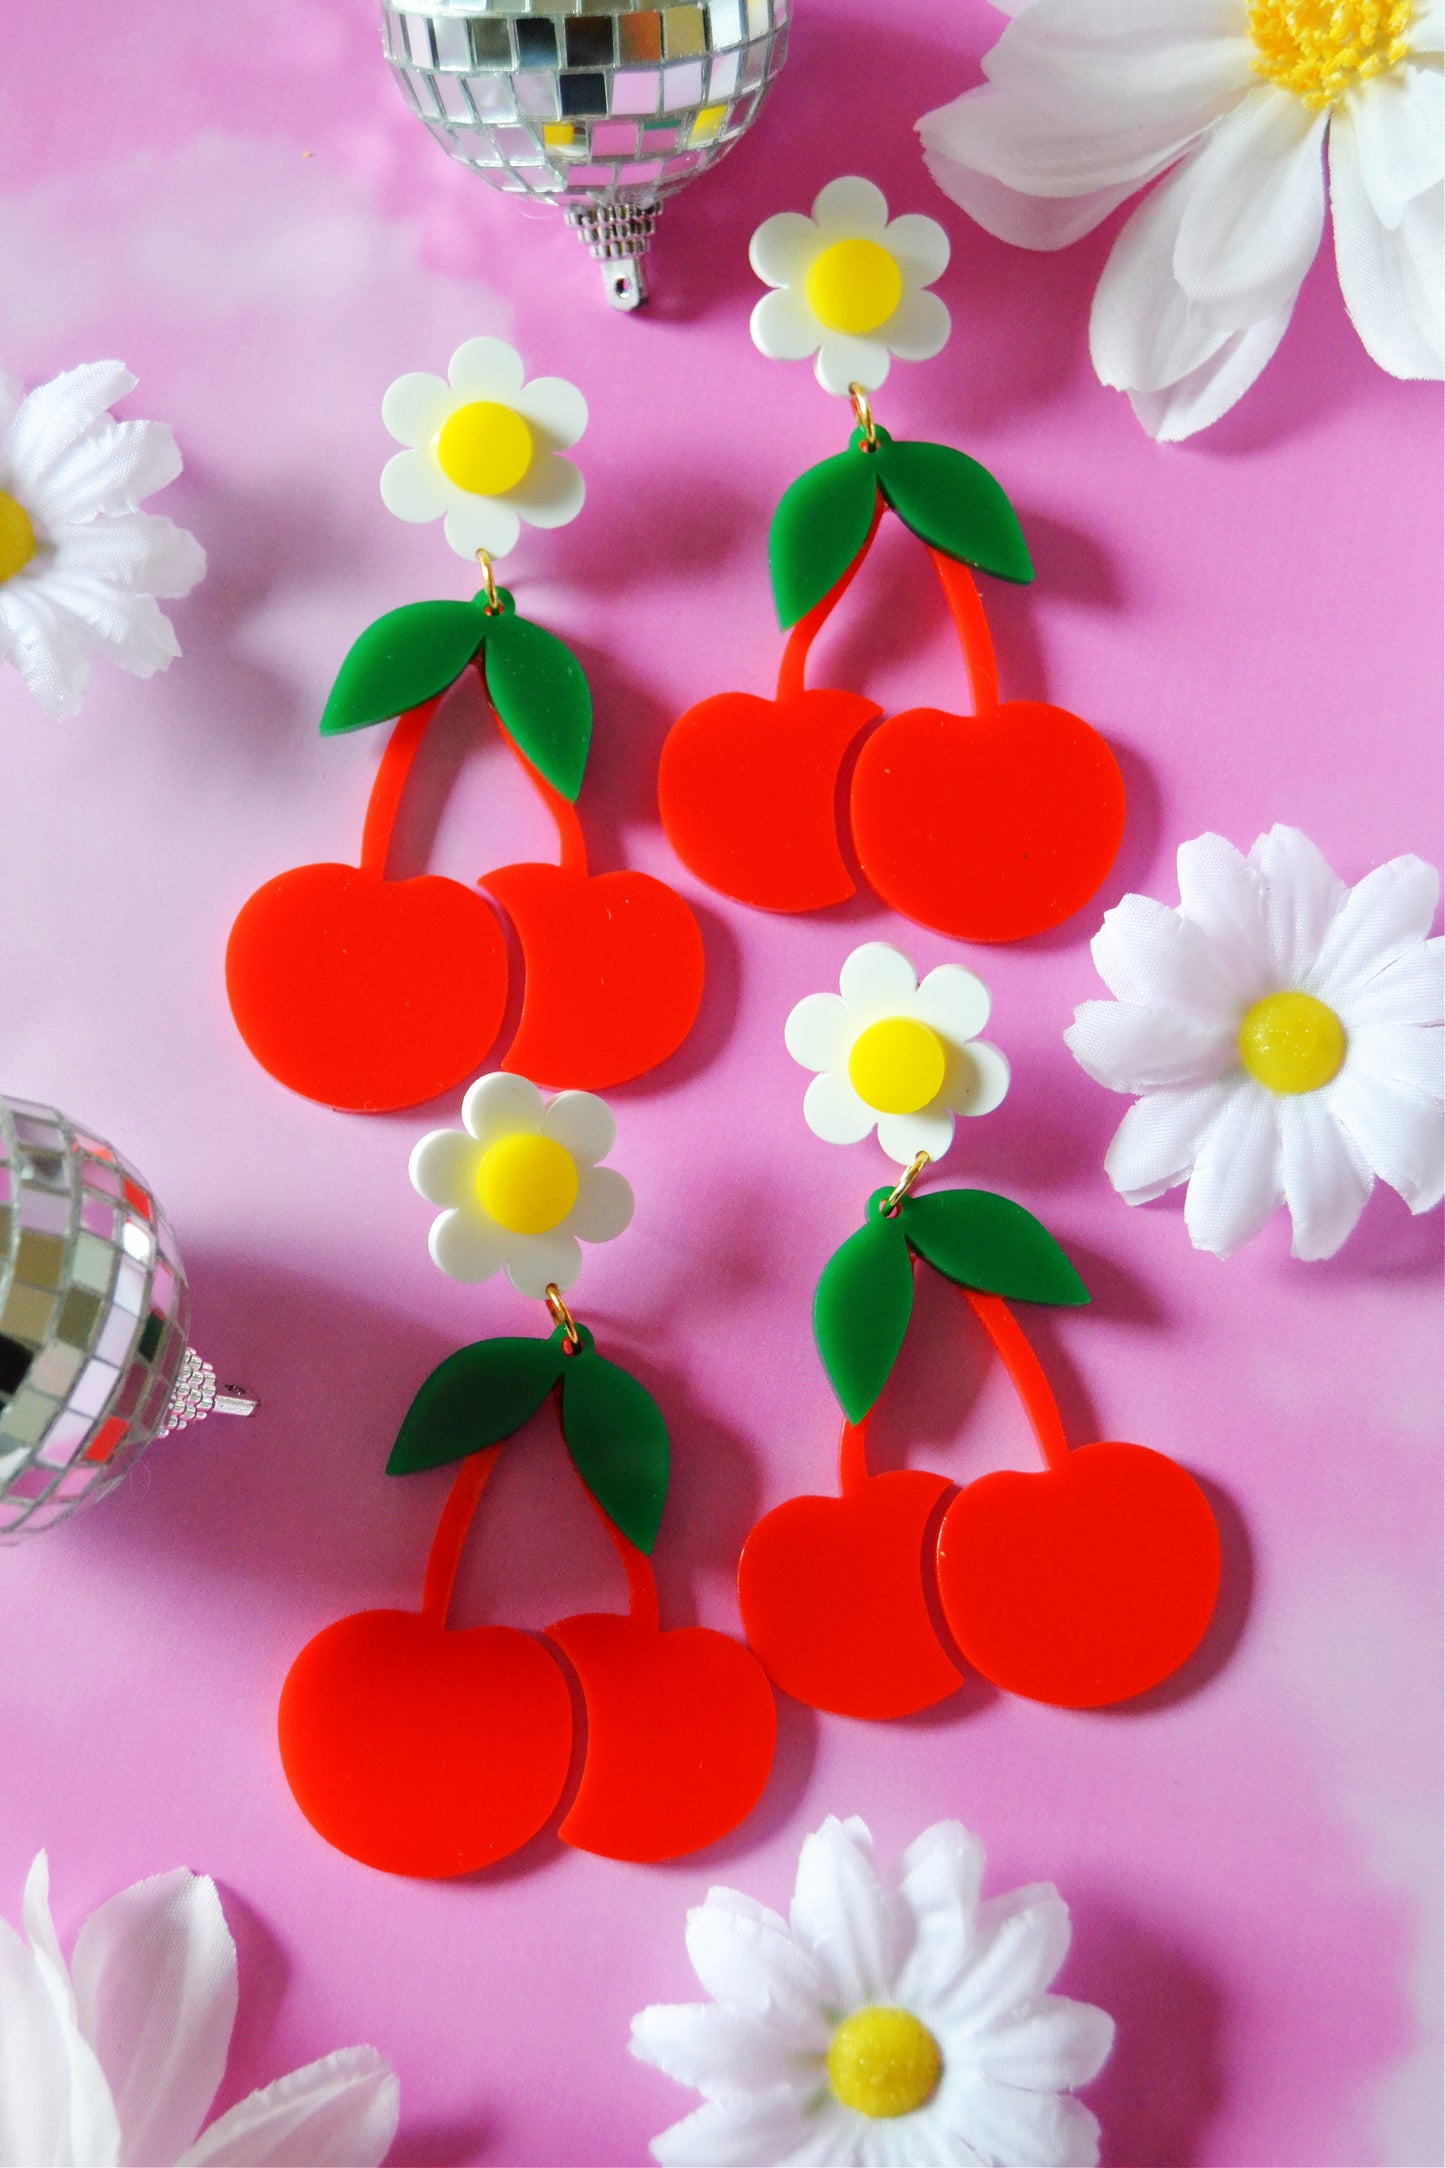 Cherry Daisy Earrings